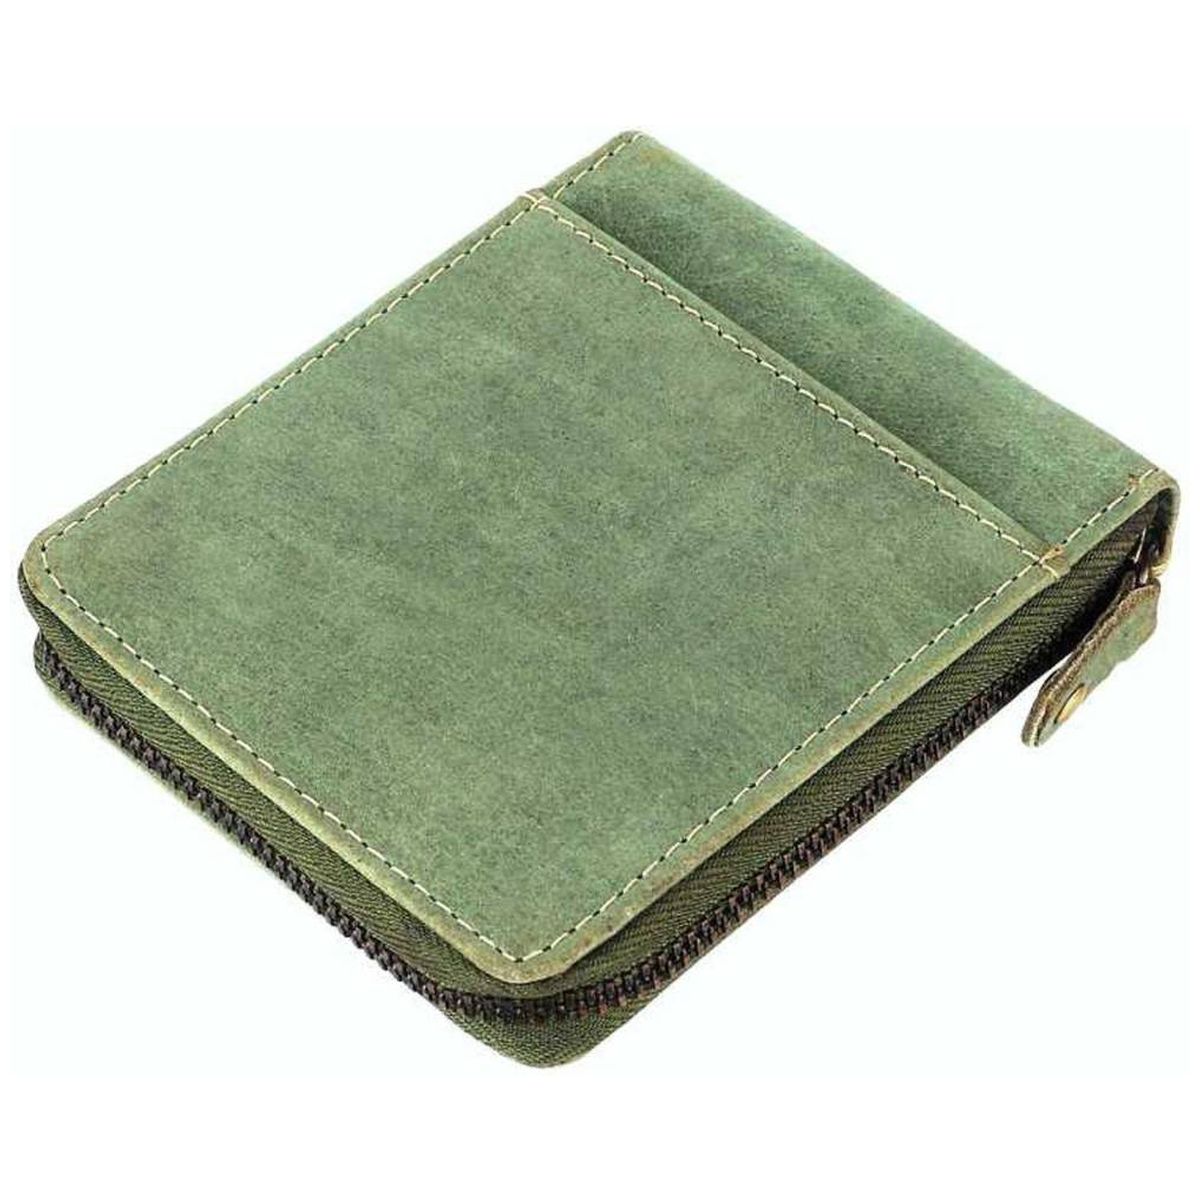 Debonair International Men Genuine Leather 6 Slots Wallet, DI934461, Green